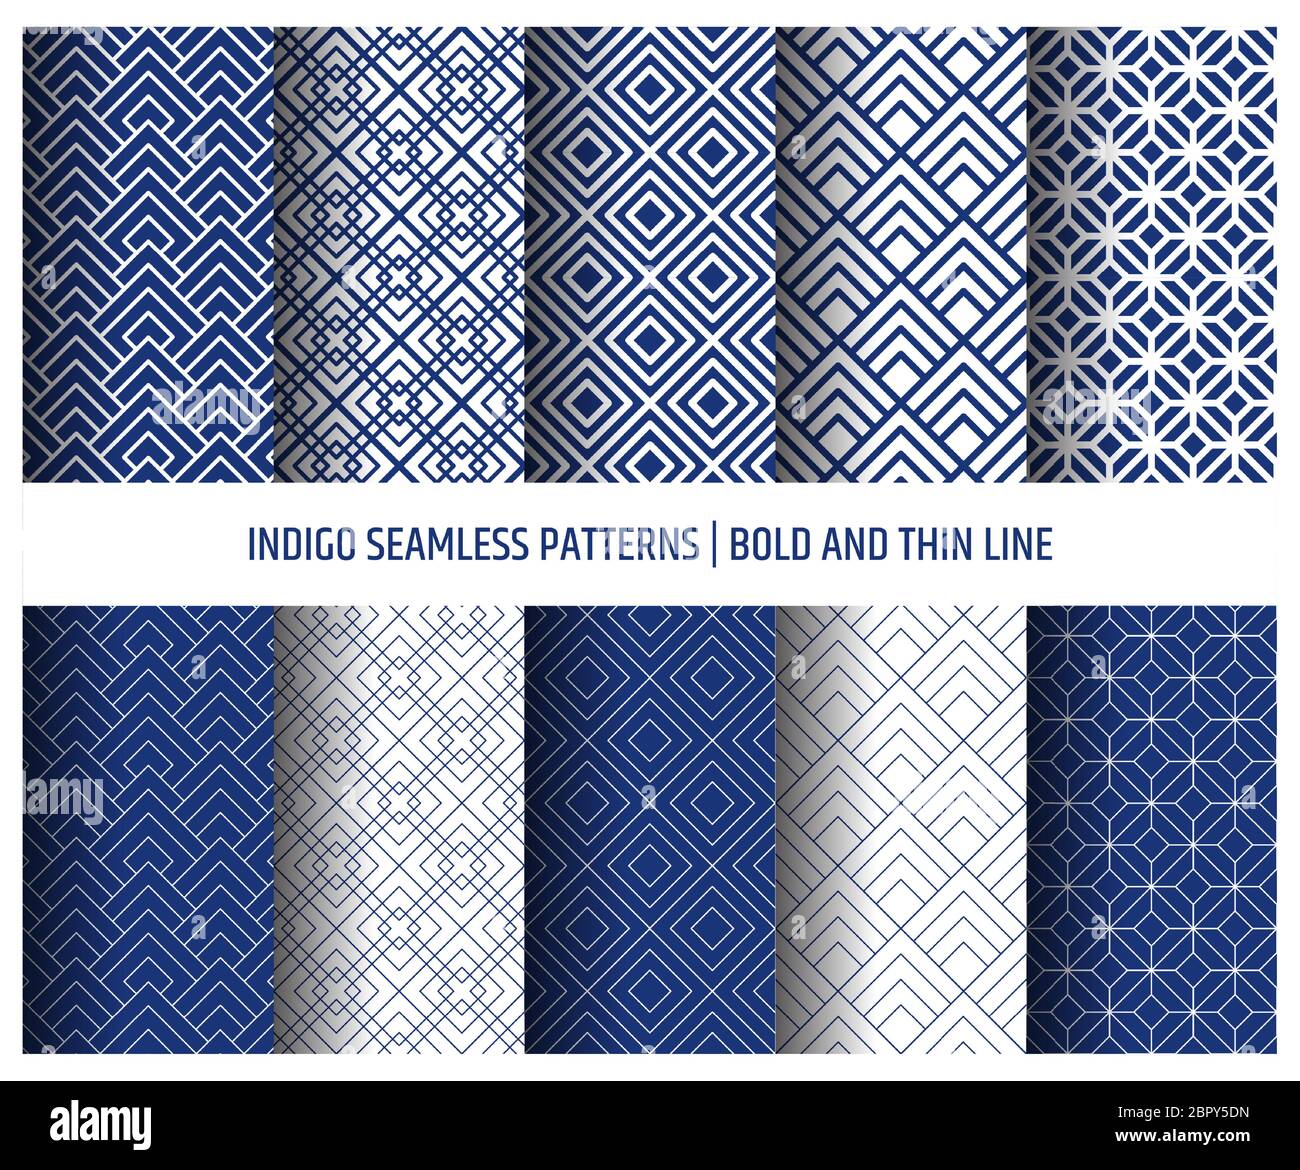 Indigo seamless patterns, bold and thin line. Japanese sashiko inspired blue and white background decoration. Stock Vector